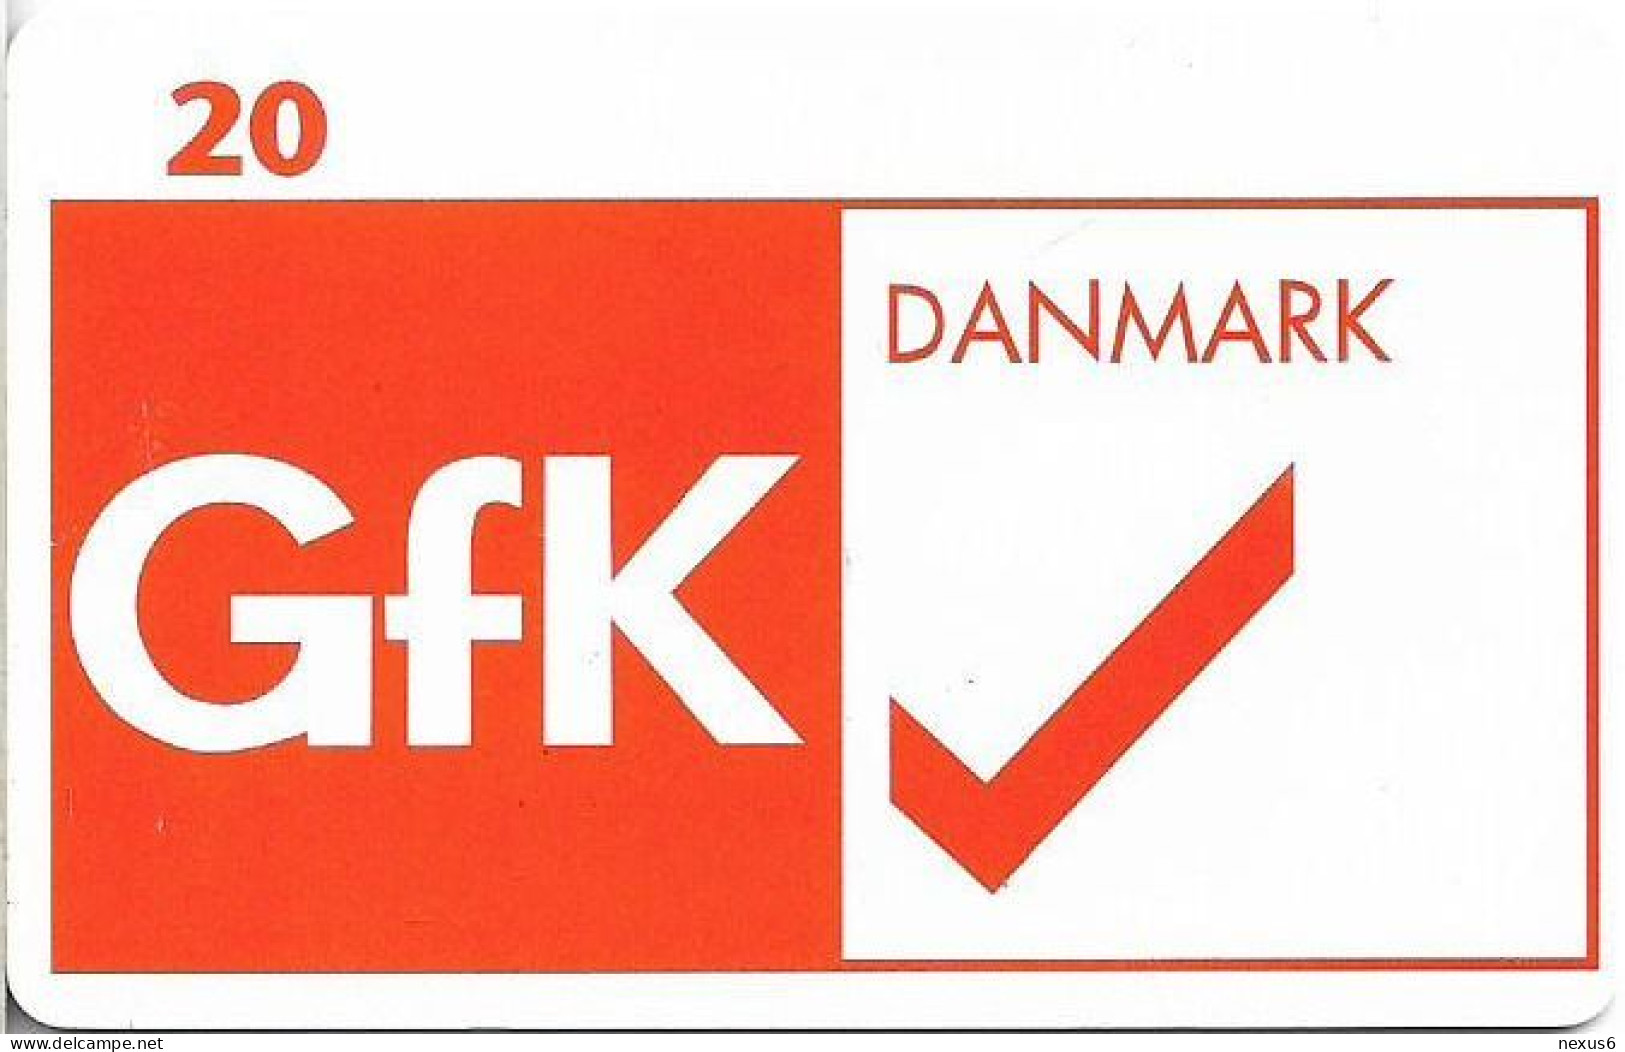 Denmark - Tele Danmark (chip) - GFK Danmark AS - TDP213B - 07.1998, 1.100ex, 20kr, Used - Danimarca